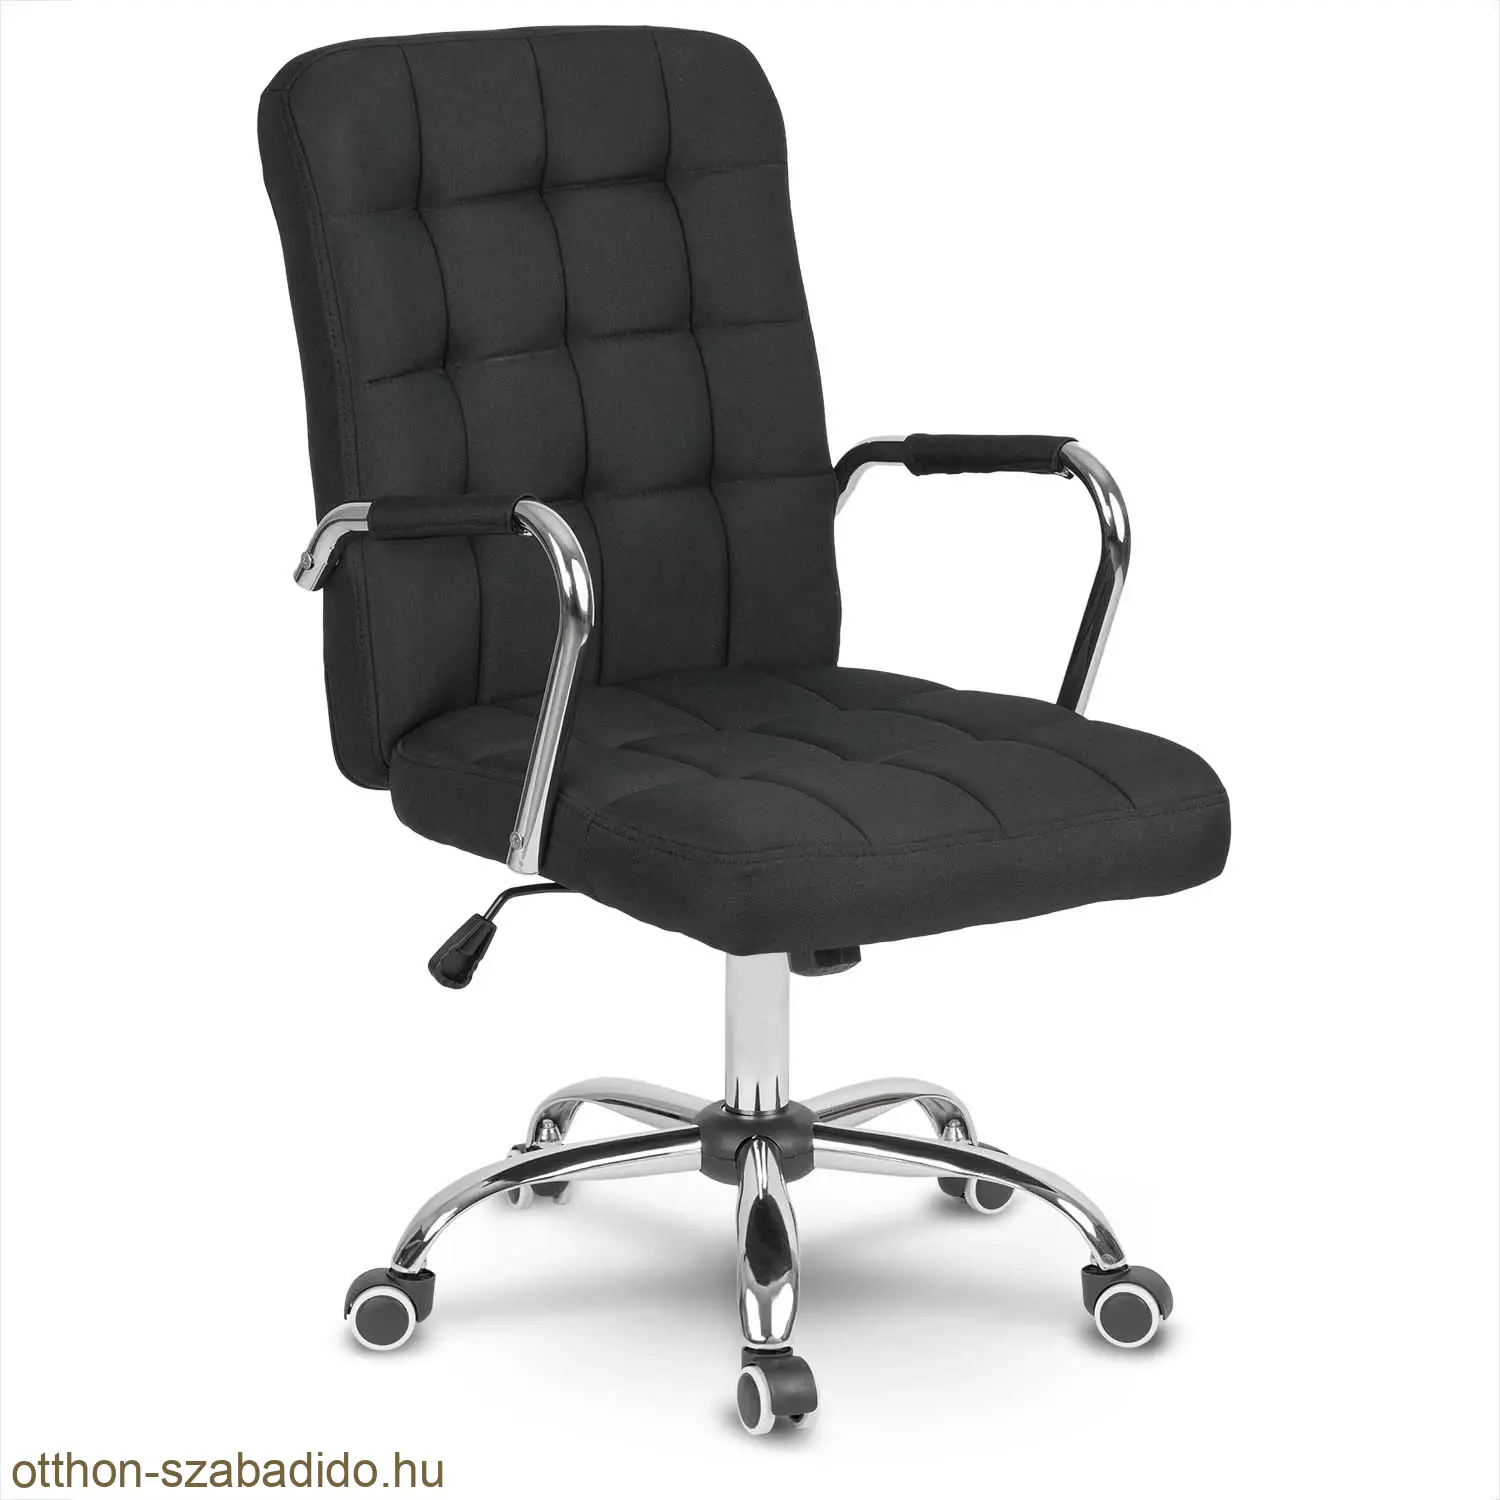 SOFOTEL textil irodai szék Benton fekete